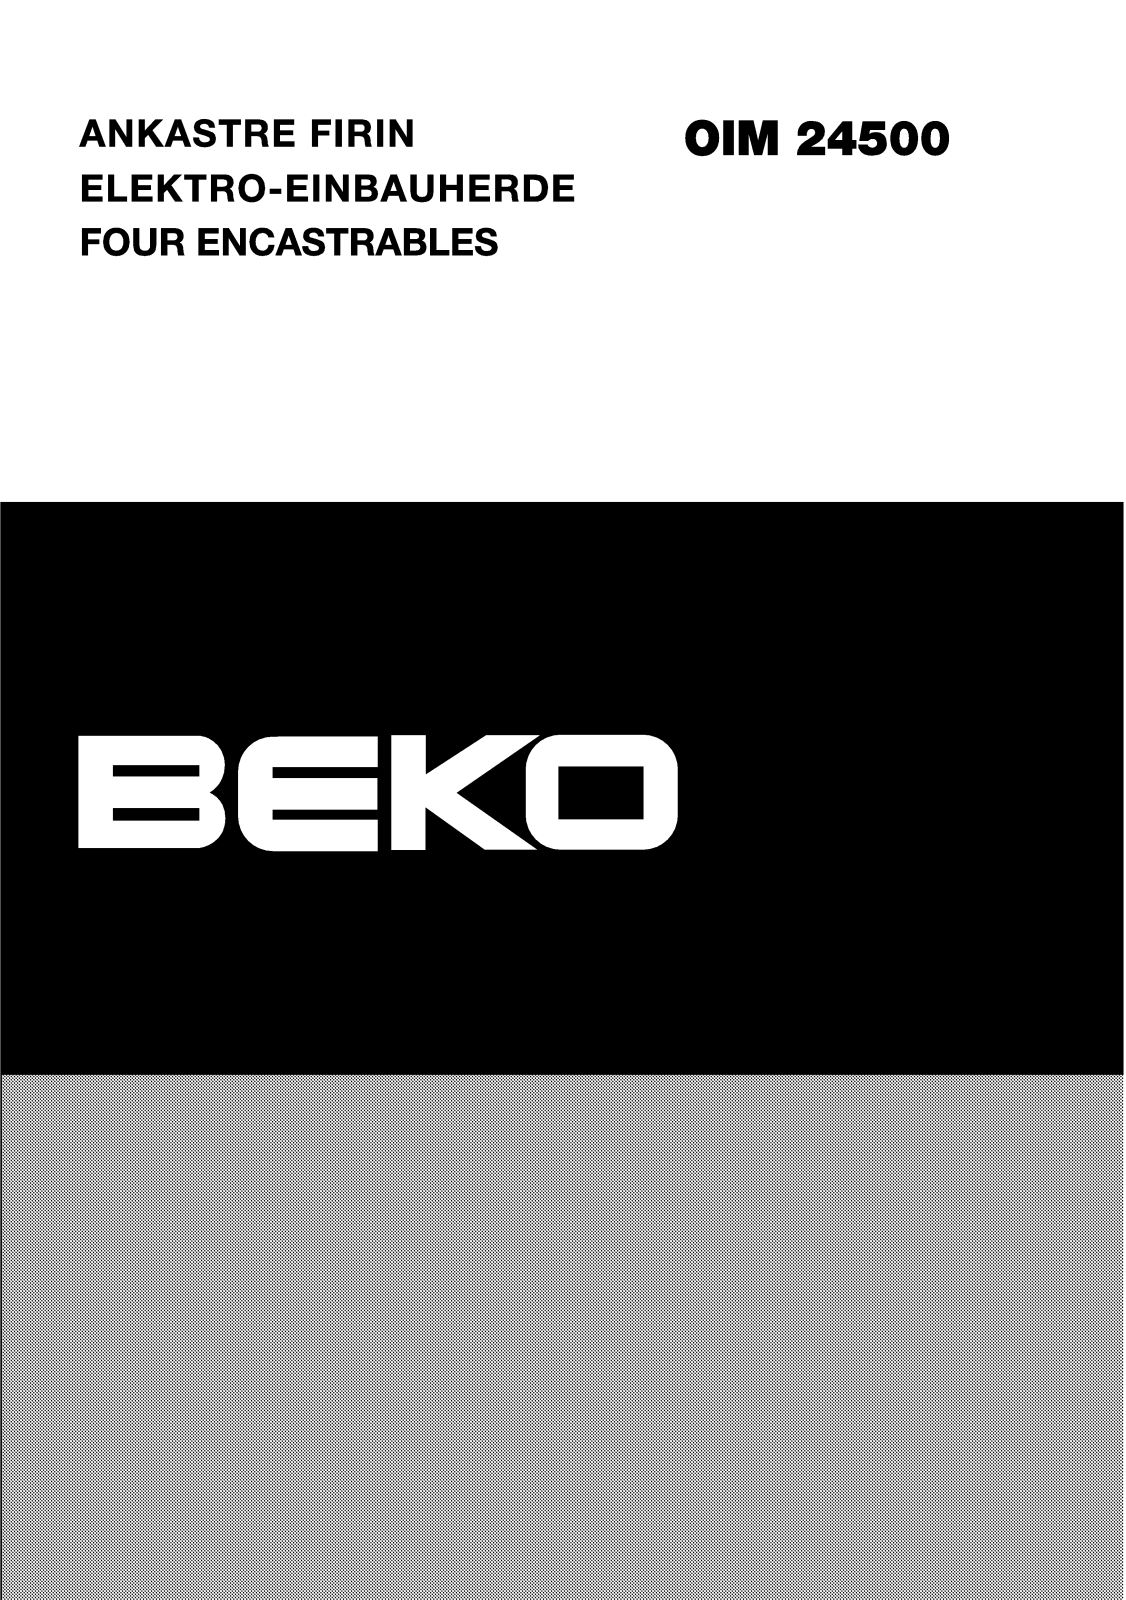 BEKO OIM24500 User Manual